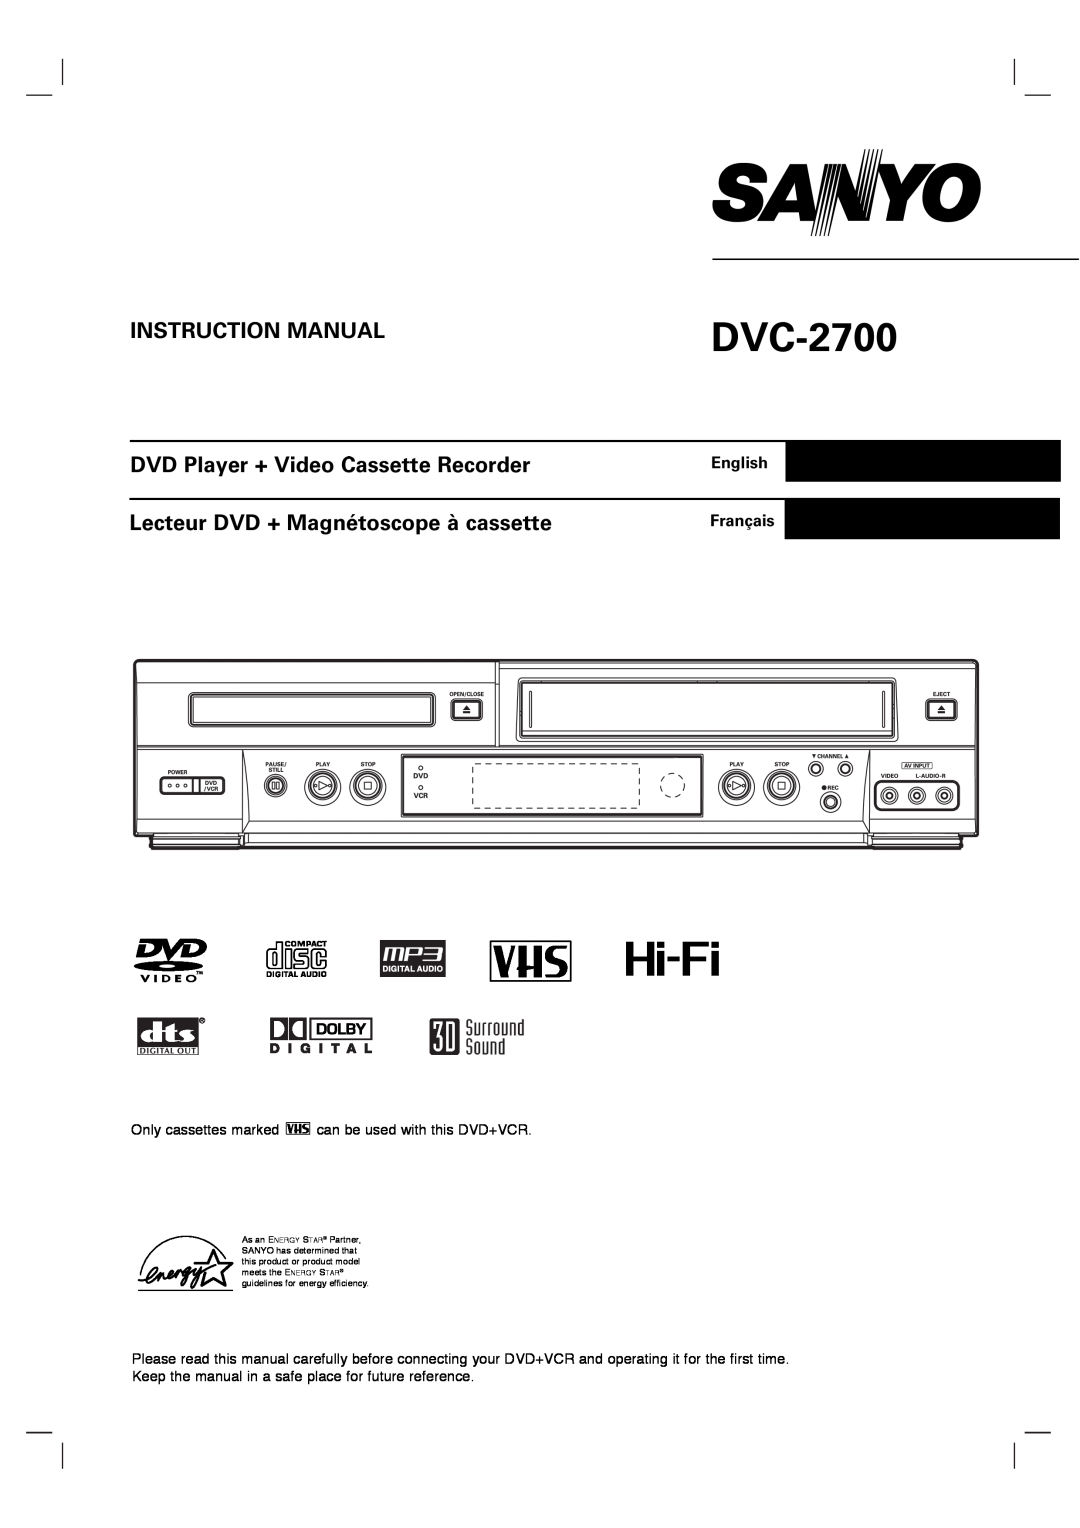 Sanyo SCP-2700 instruction manual English, Français, DVC-2700, Instruction Manual, DVD Player + Video Cassette Recorder 